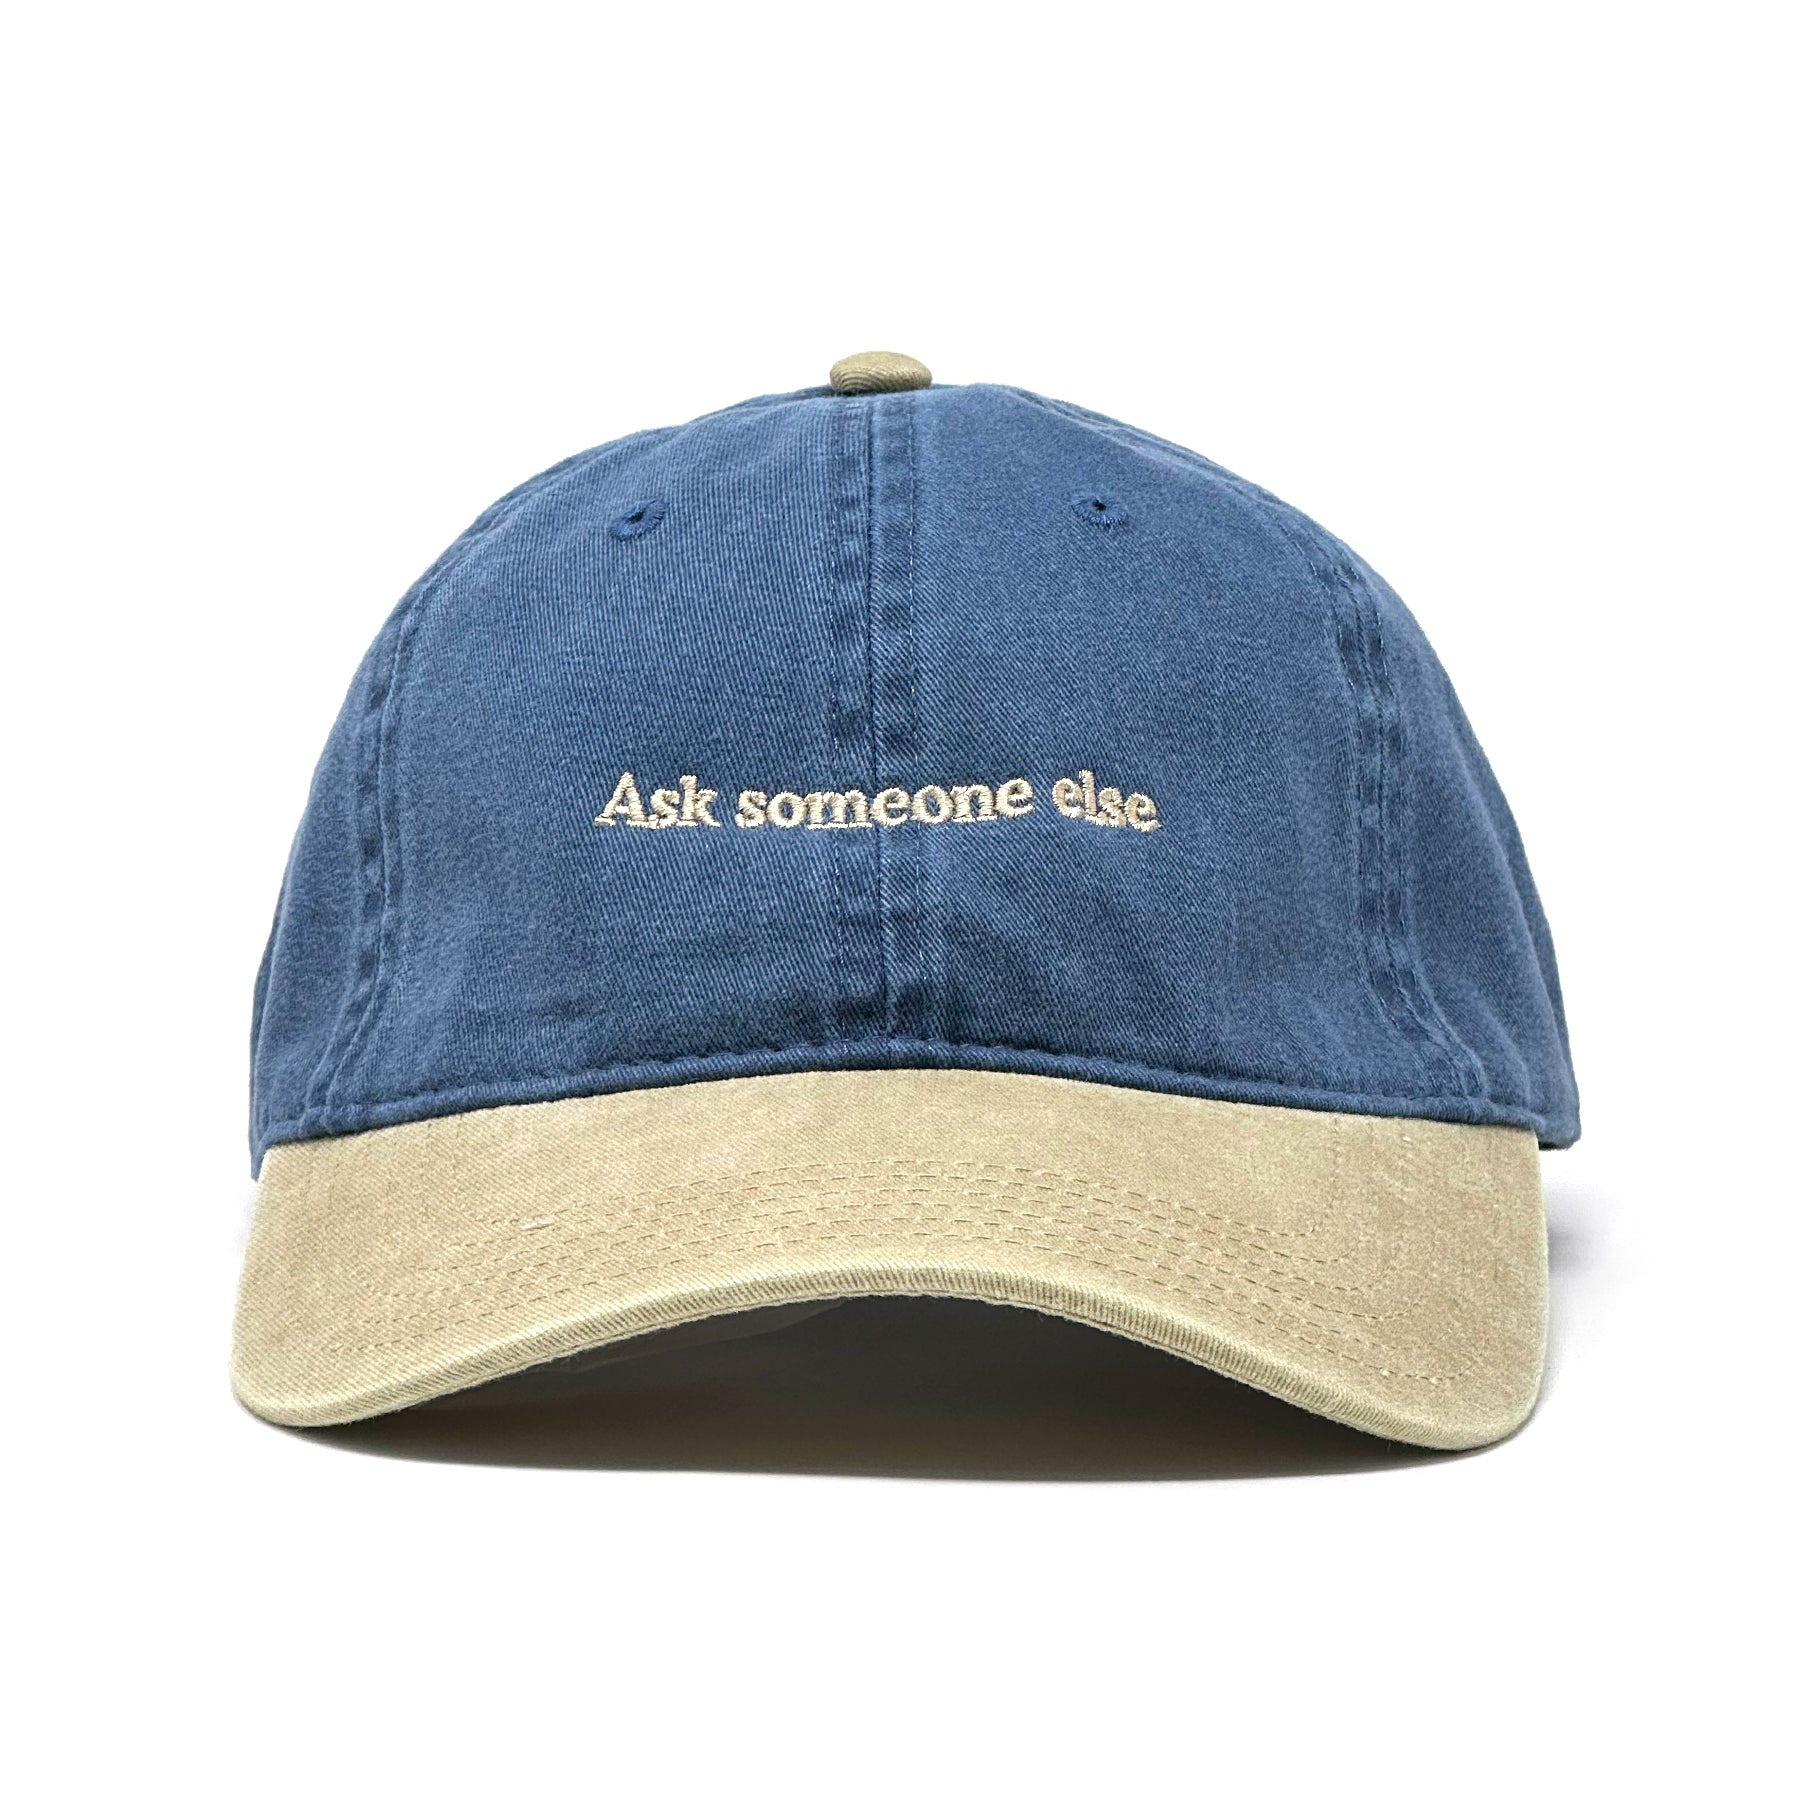 Ask someone else Hat - Blue/Tan